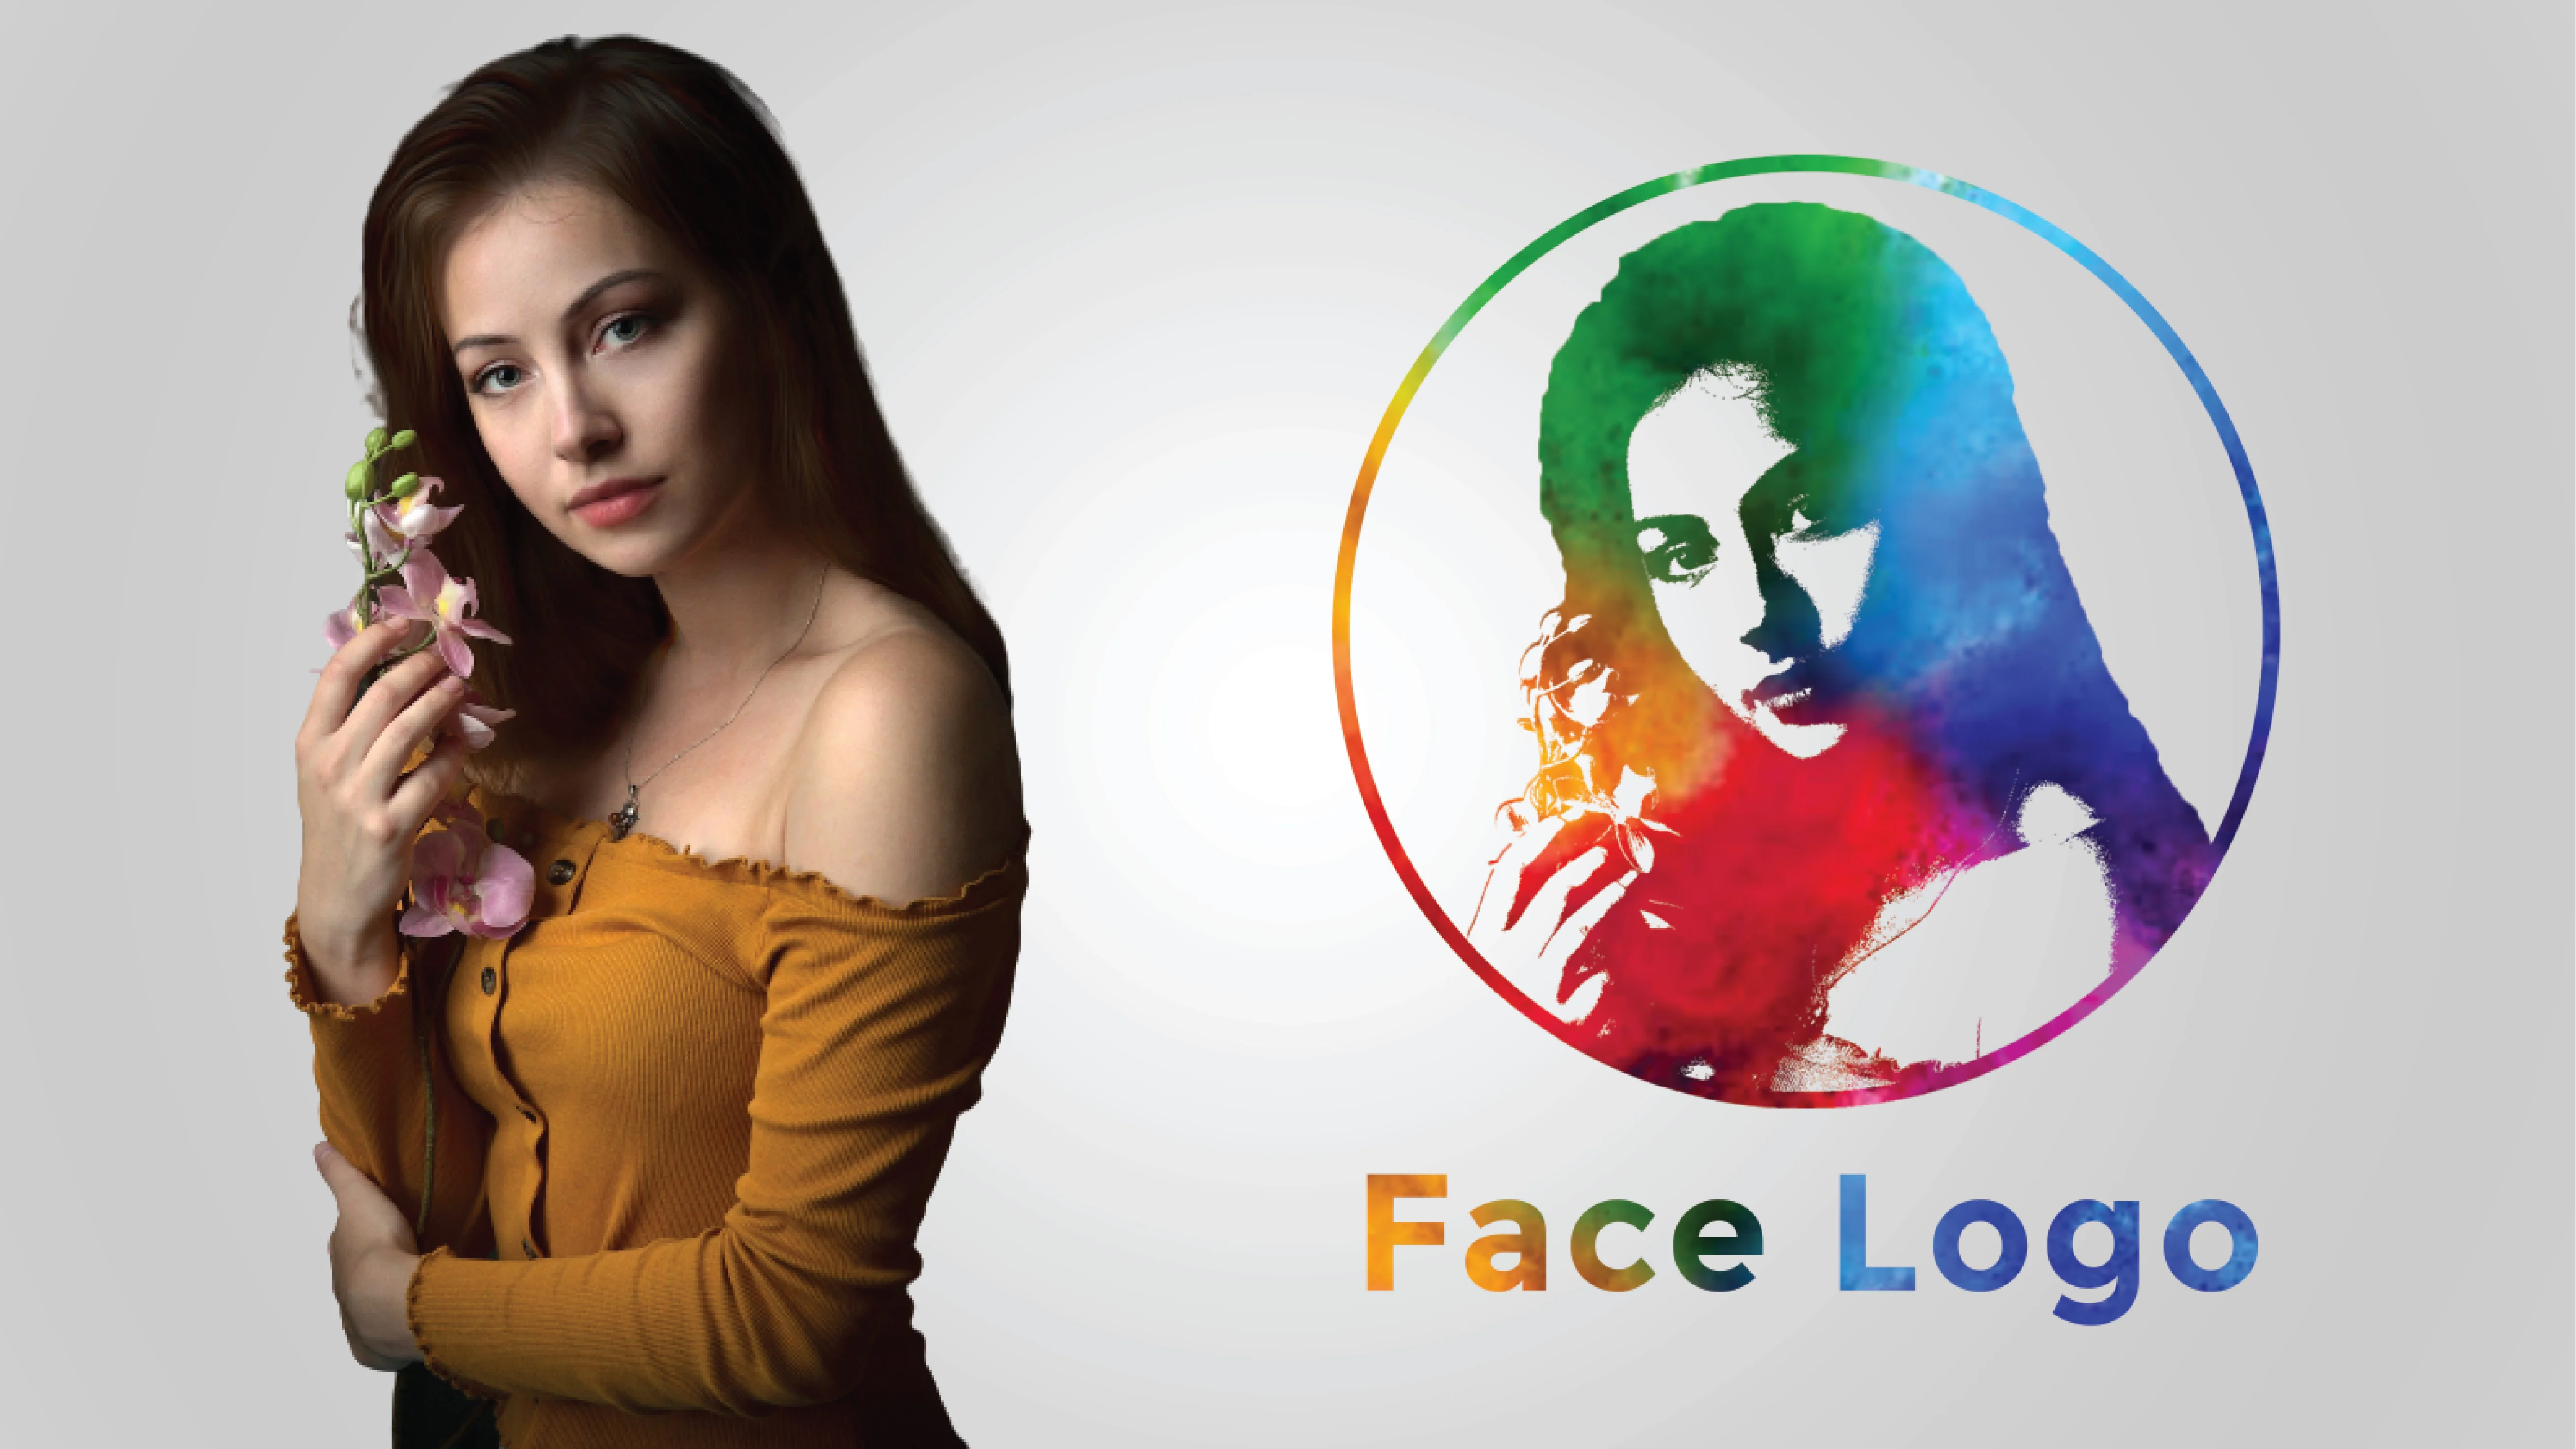 Face Logo Design in Photoshop